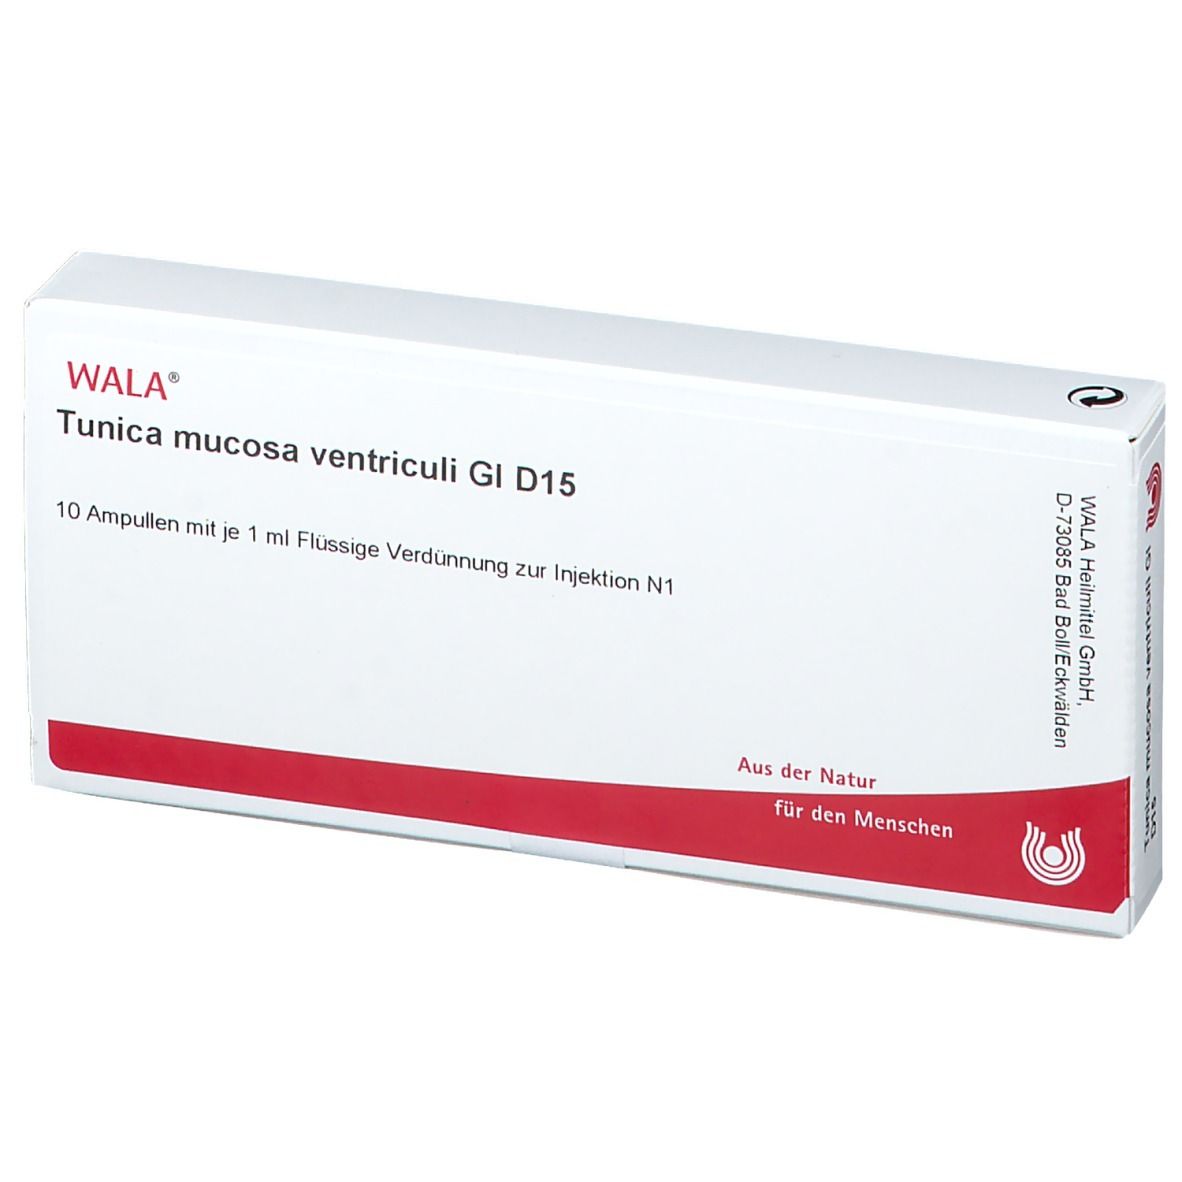 WALA® Tunica mucosa ventriculi Gl D 15